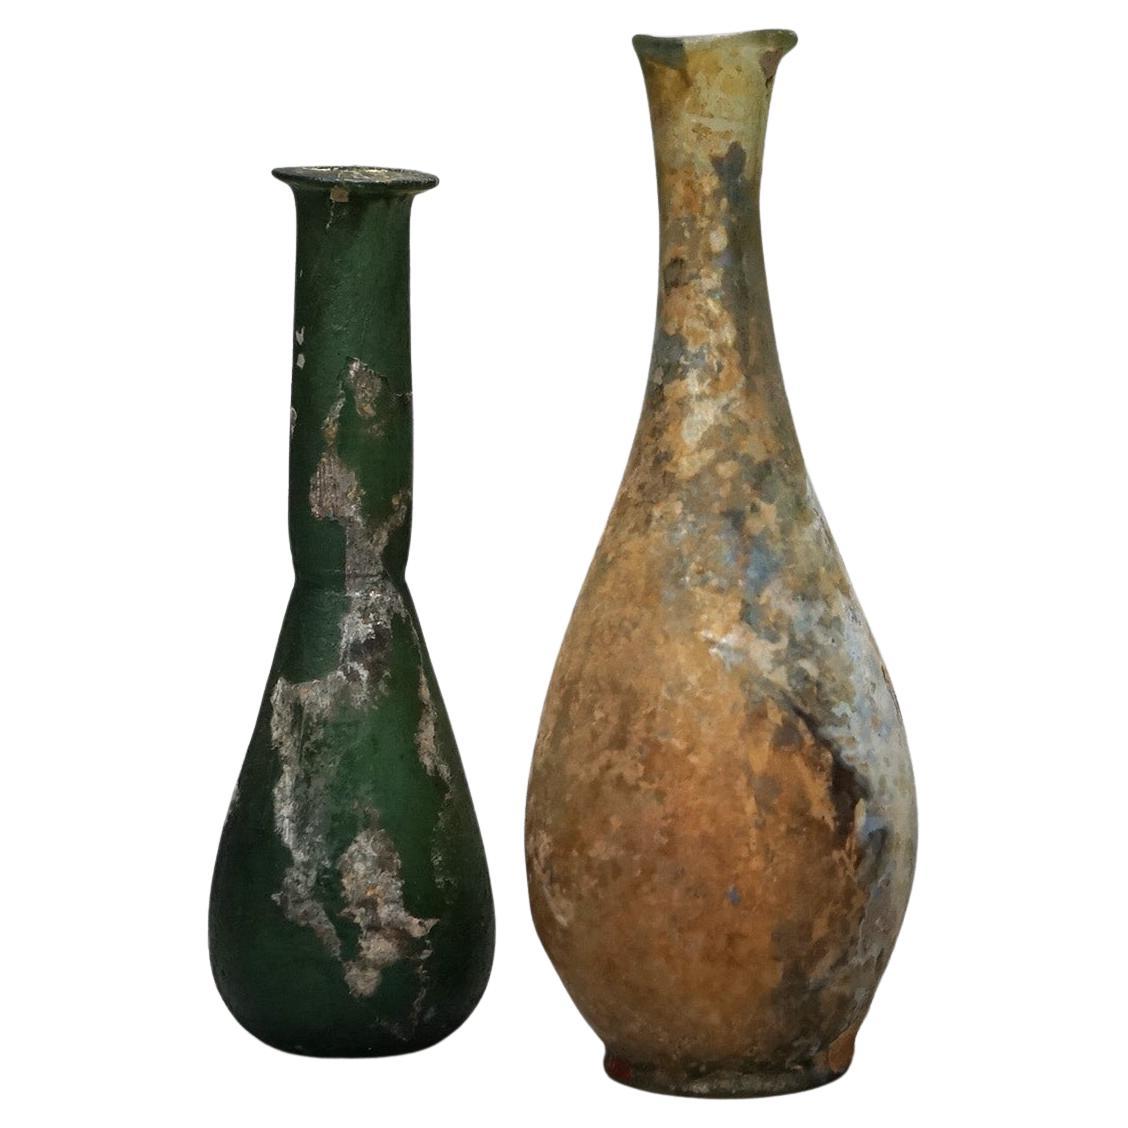 Two Antique Roman Glass Vases, 18th Century